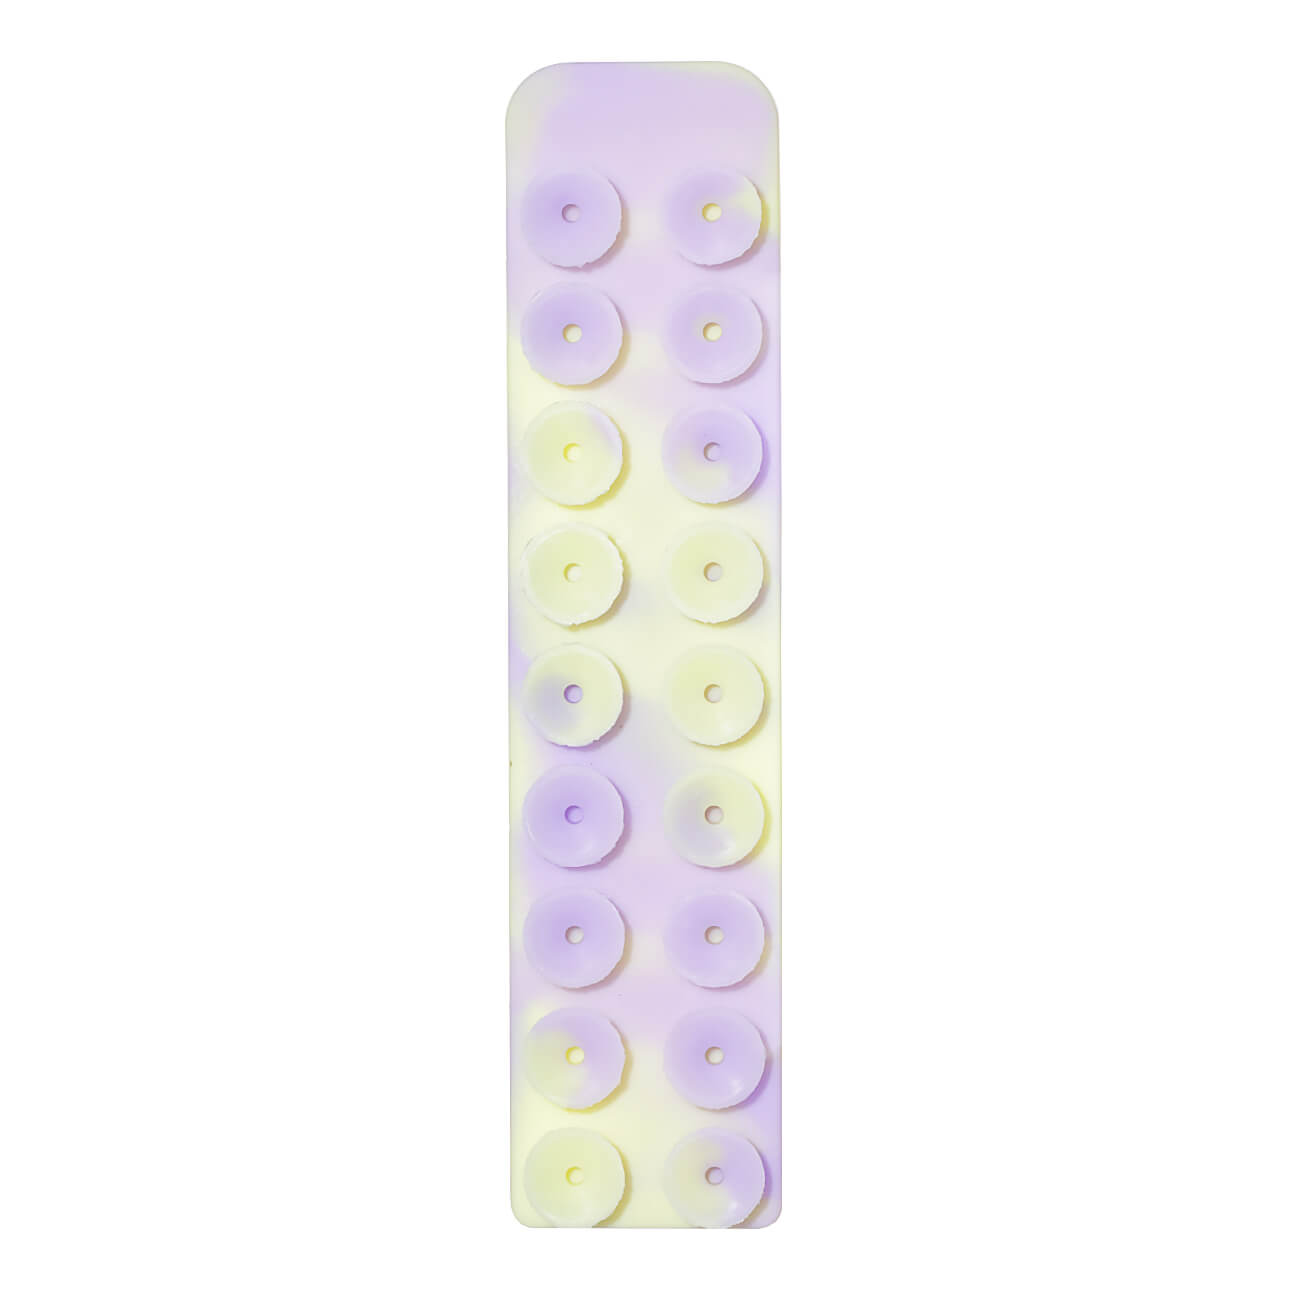 Игрушка-антистресс Squidopop, 35х15 см, силикон, цветная, Squidopop раскраска антистресс